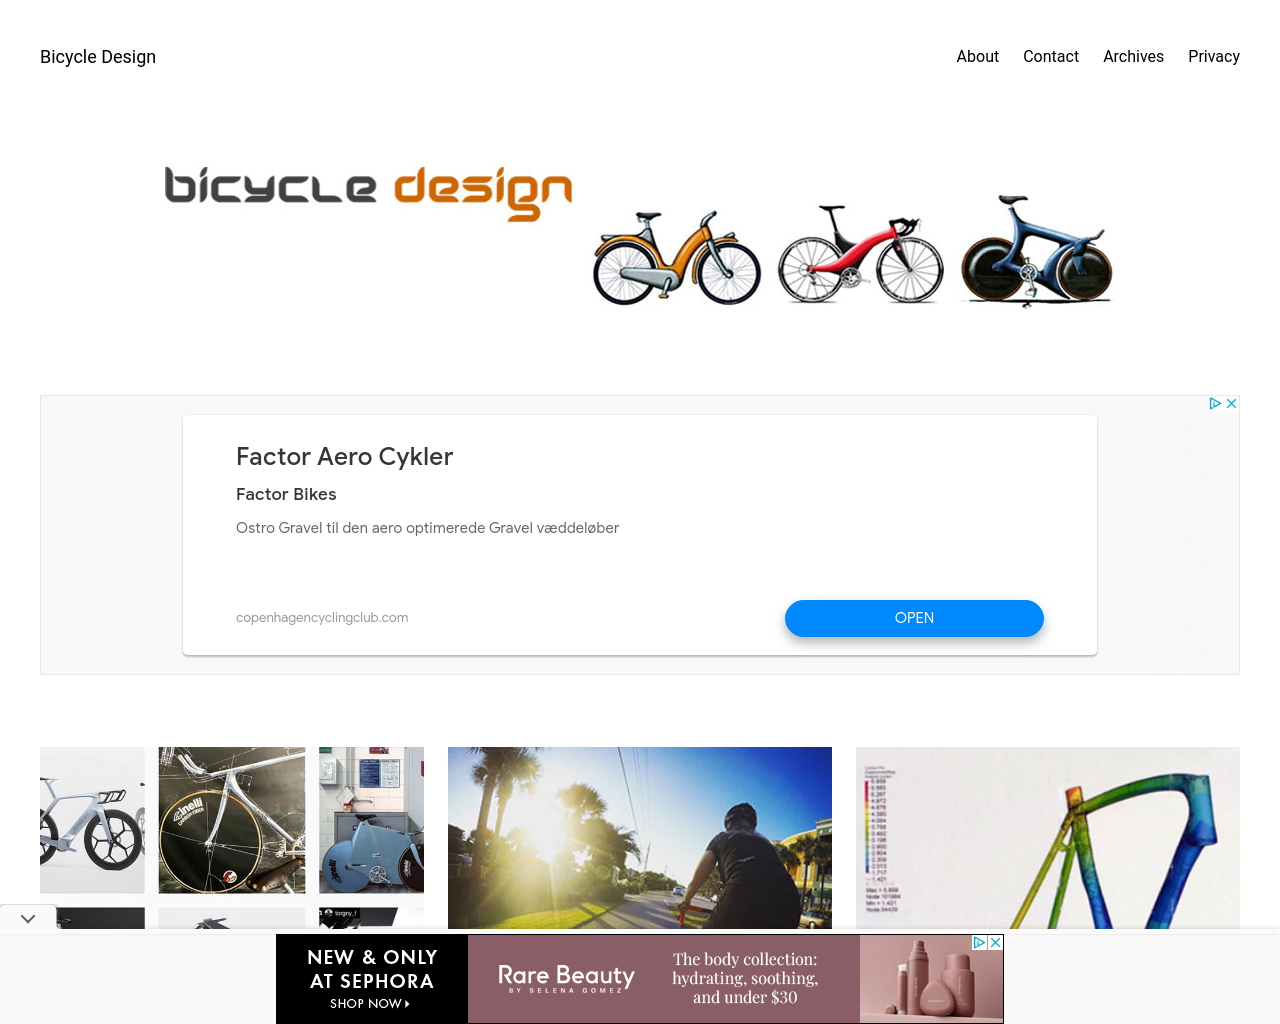 bicycledesign.net